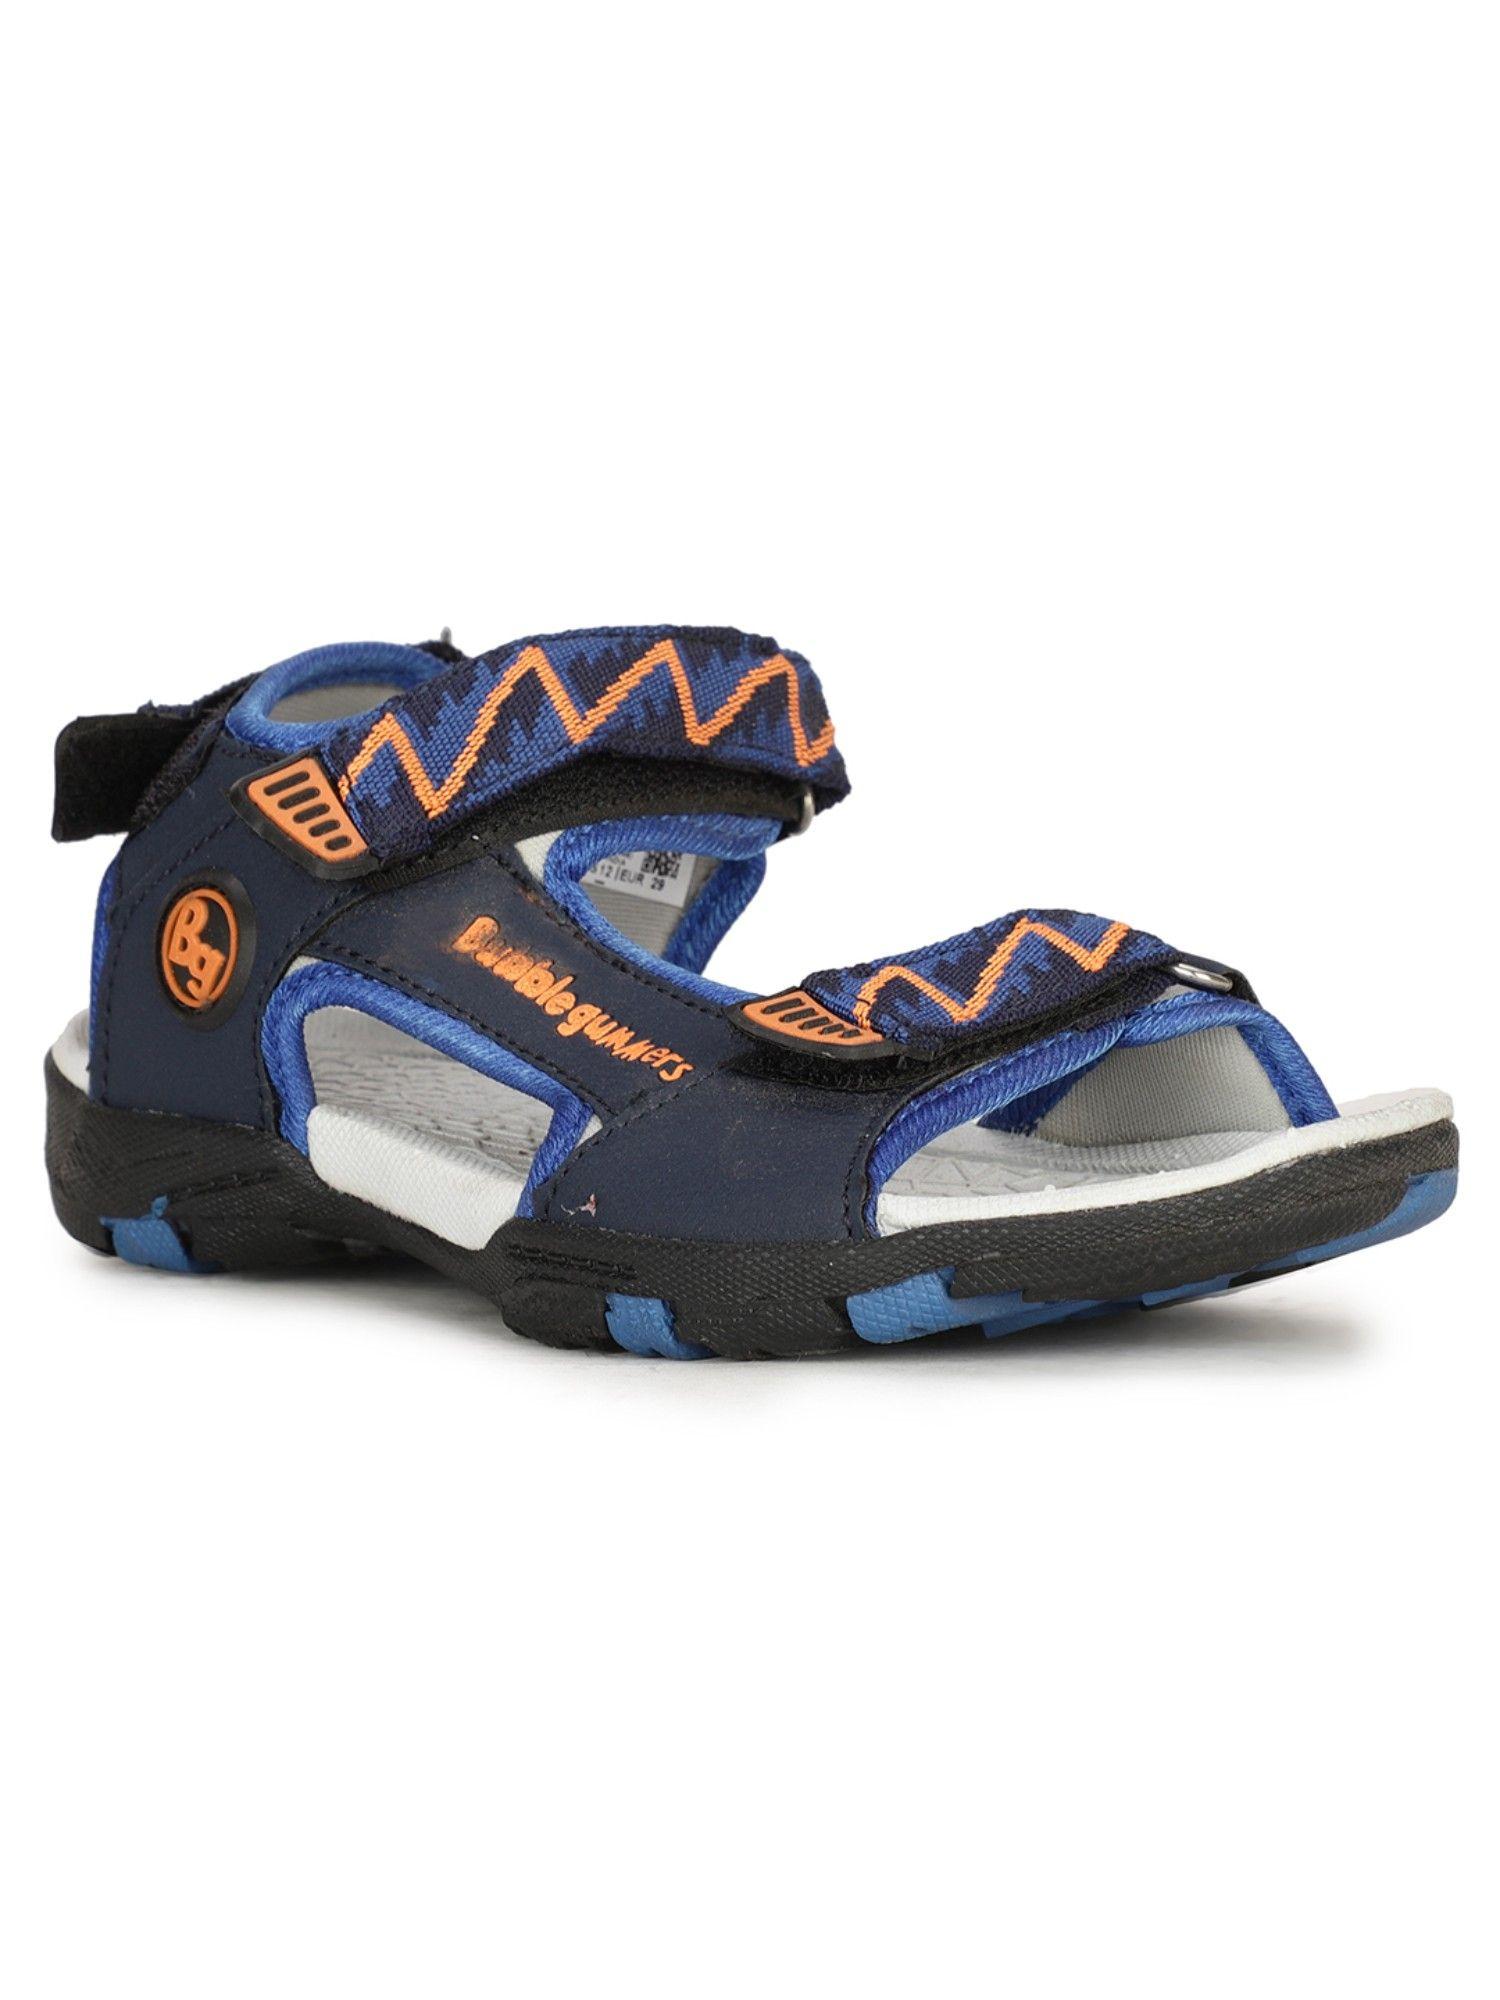 Unisex Velcro Sports Sandals